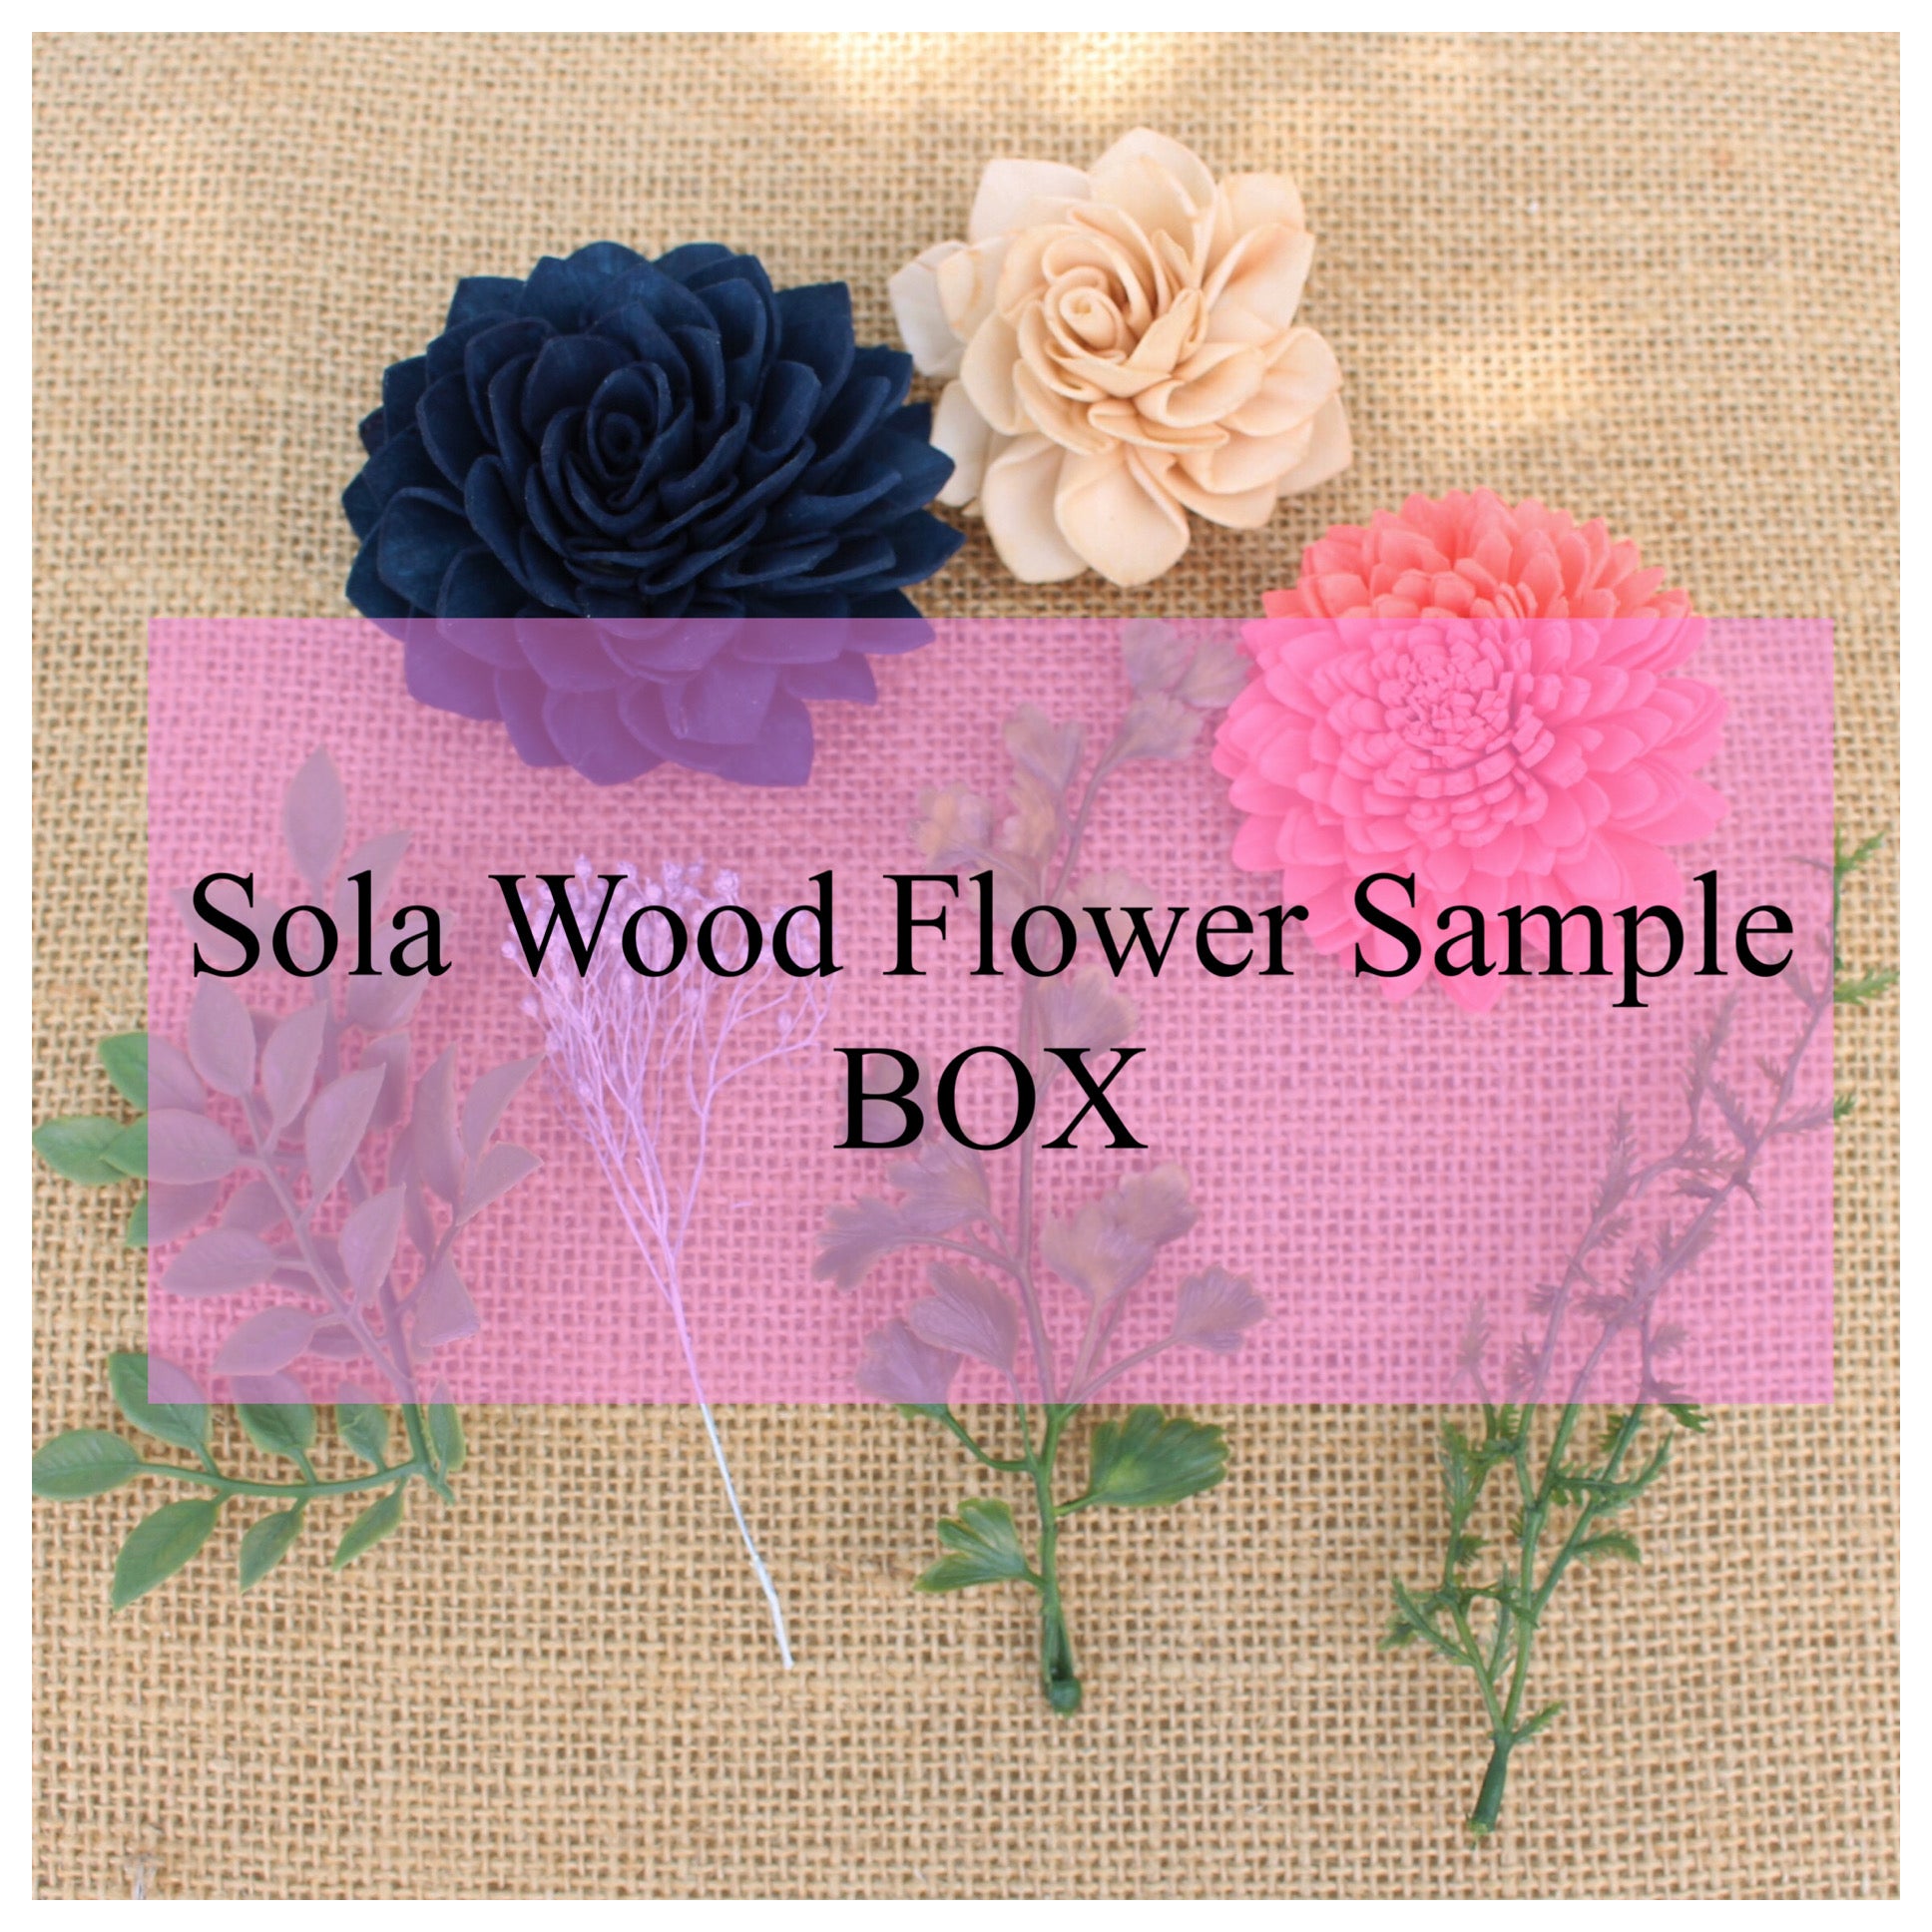 sola wood flower sample box